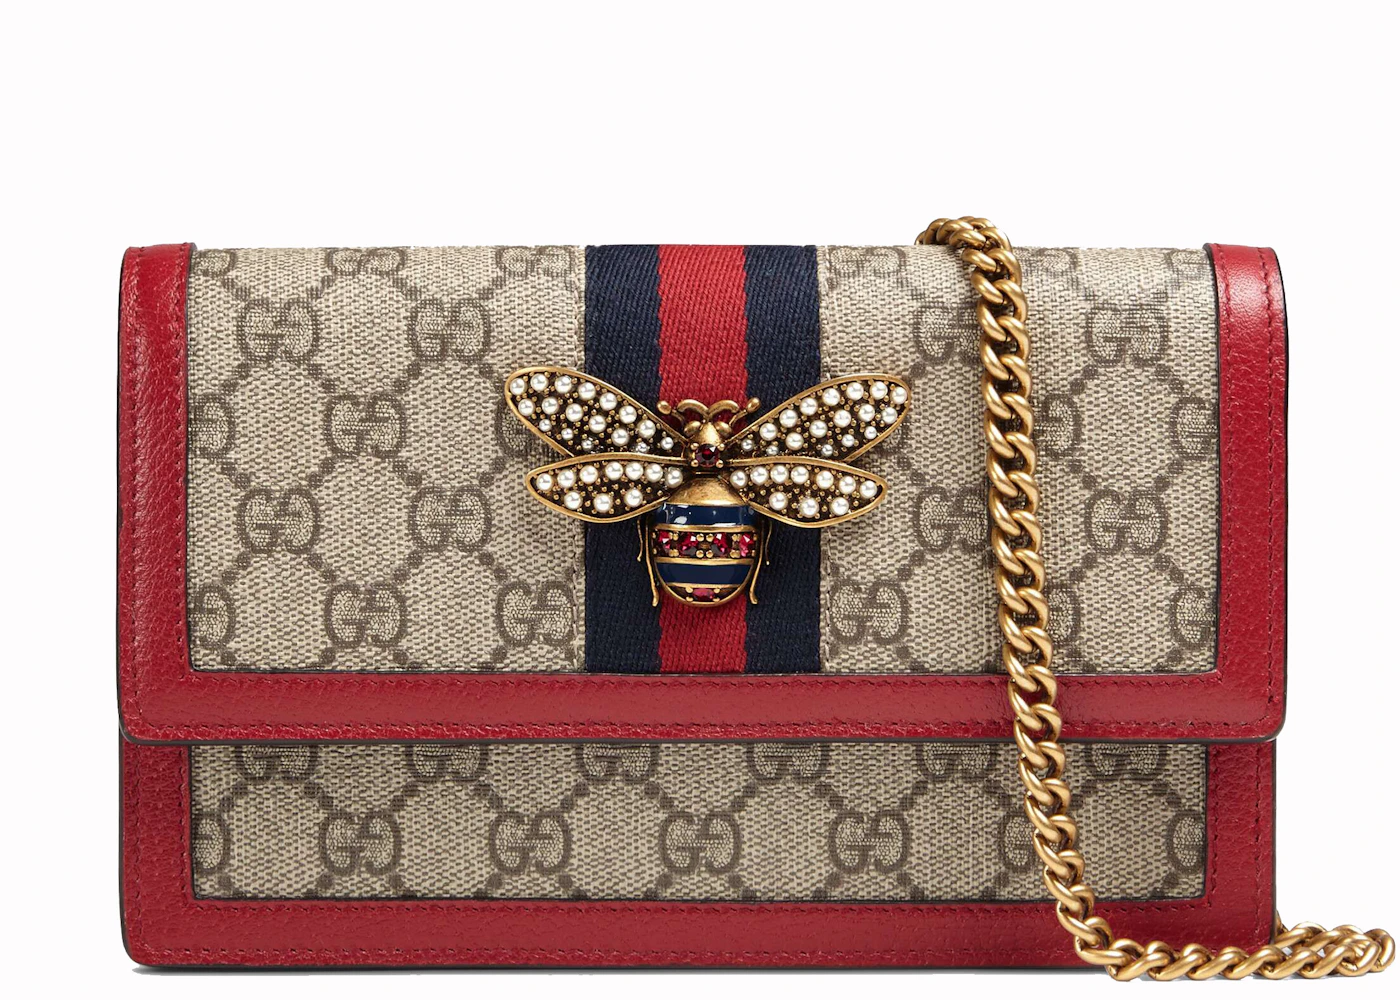 Gucci Queen Margaret small top handle bag